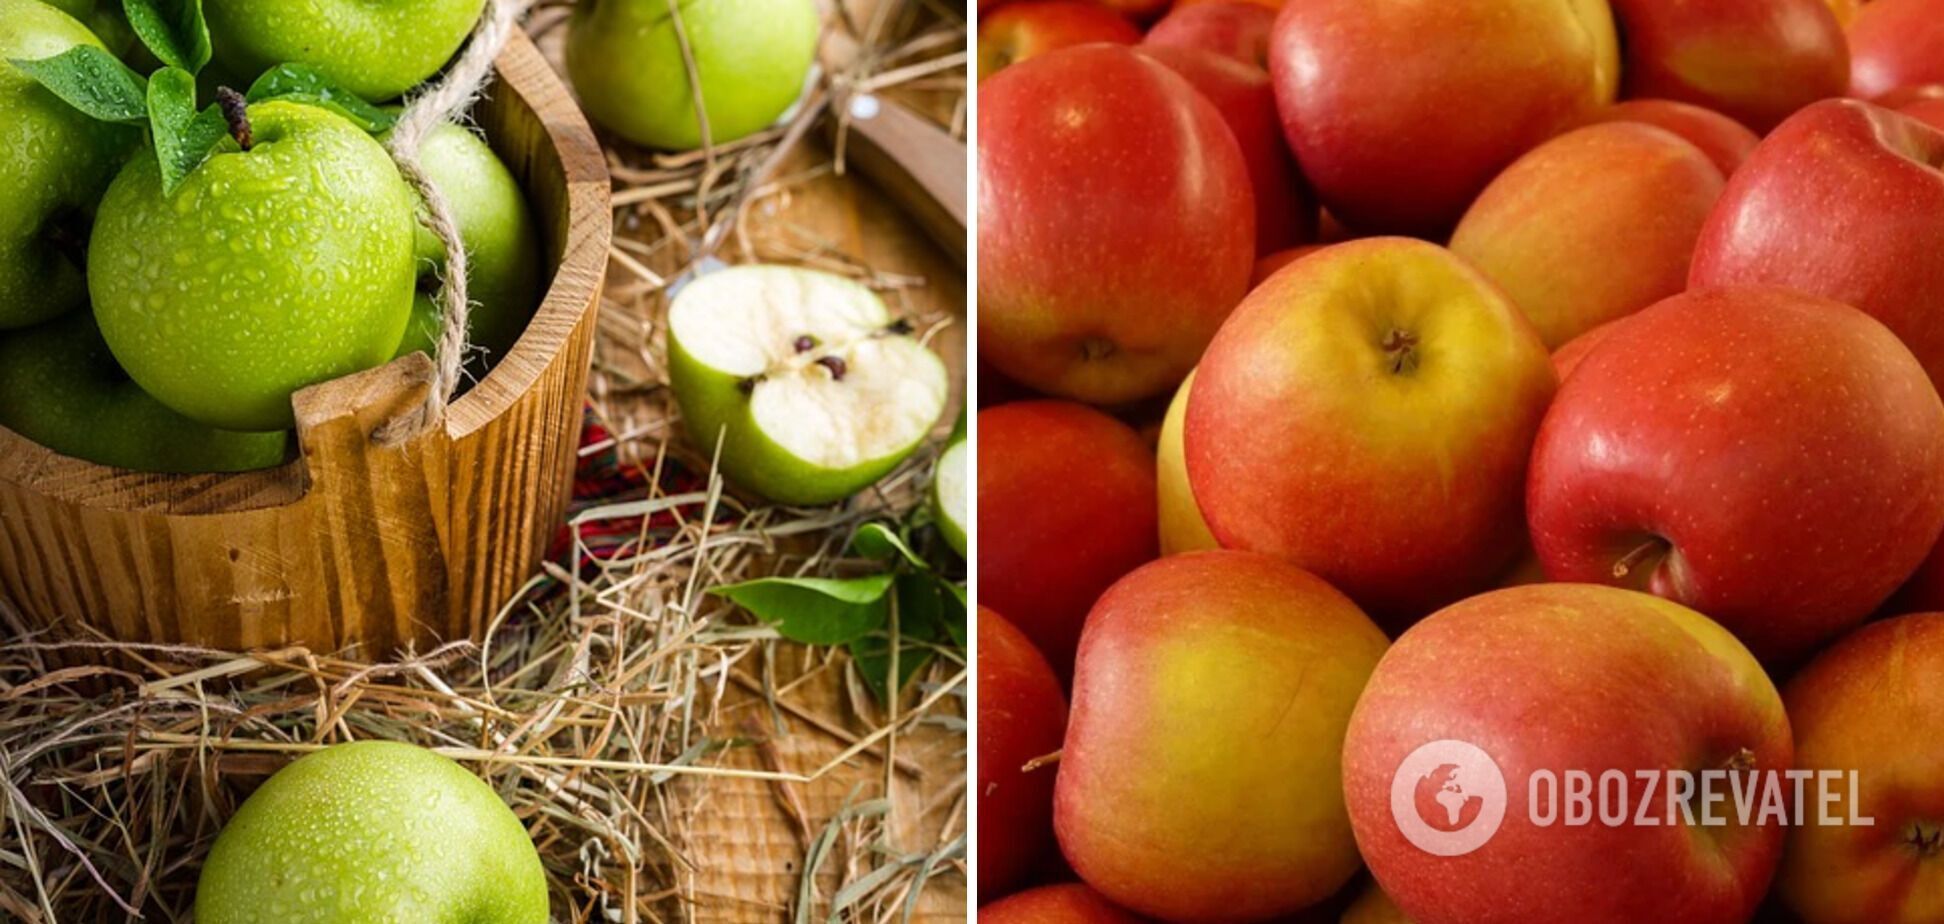 Apples contain more vitamin C than lemon